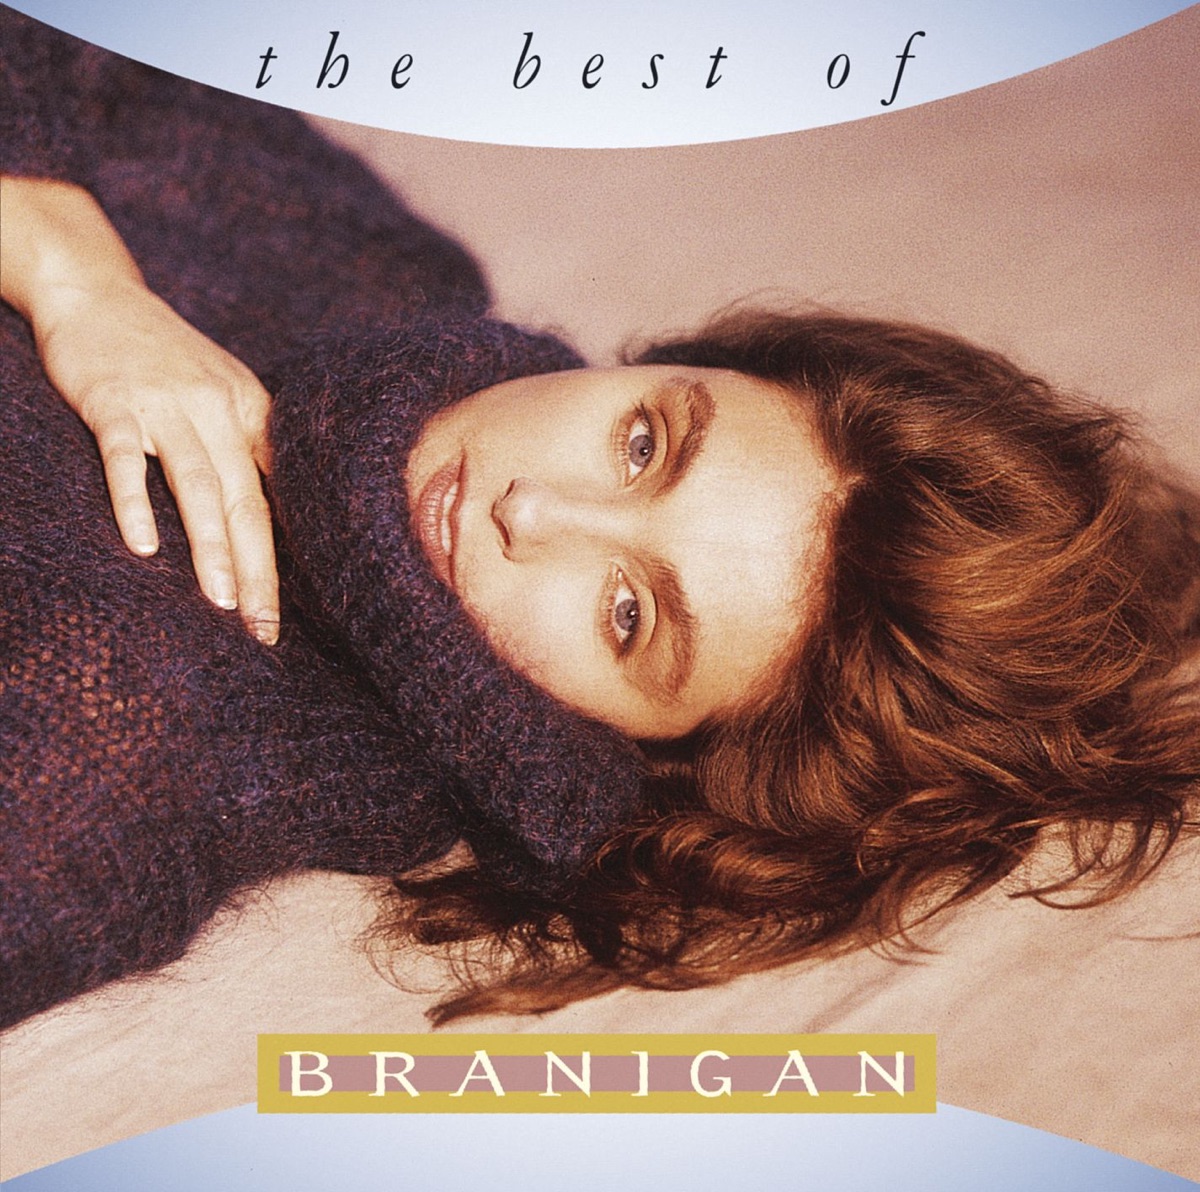 Laura Branigan: albums, songs, playlists